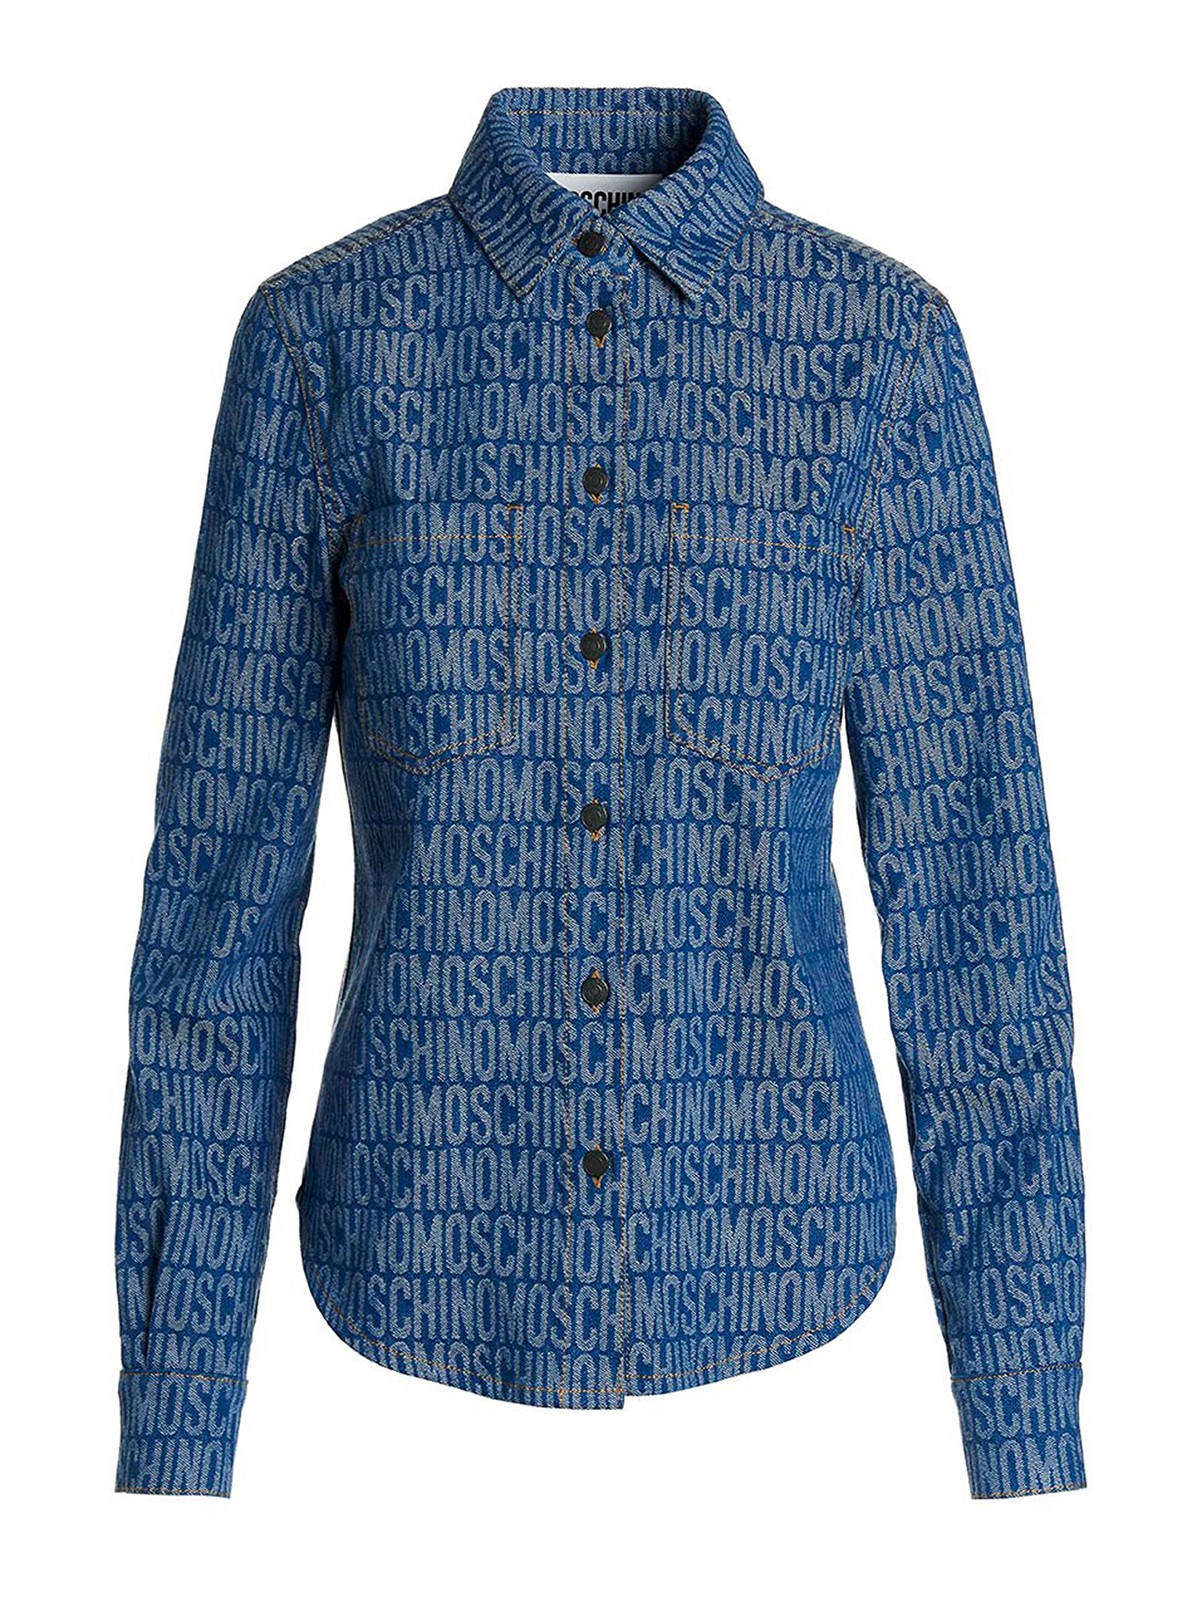 Moschino - Monogram shirt - 020127231299 Shop online at